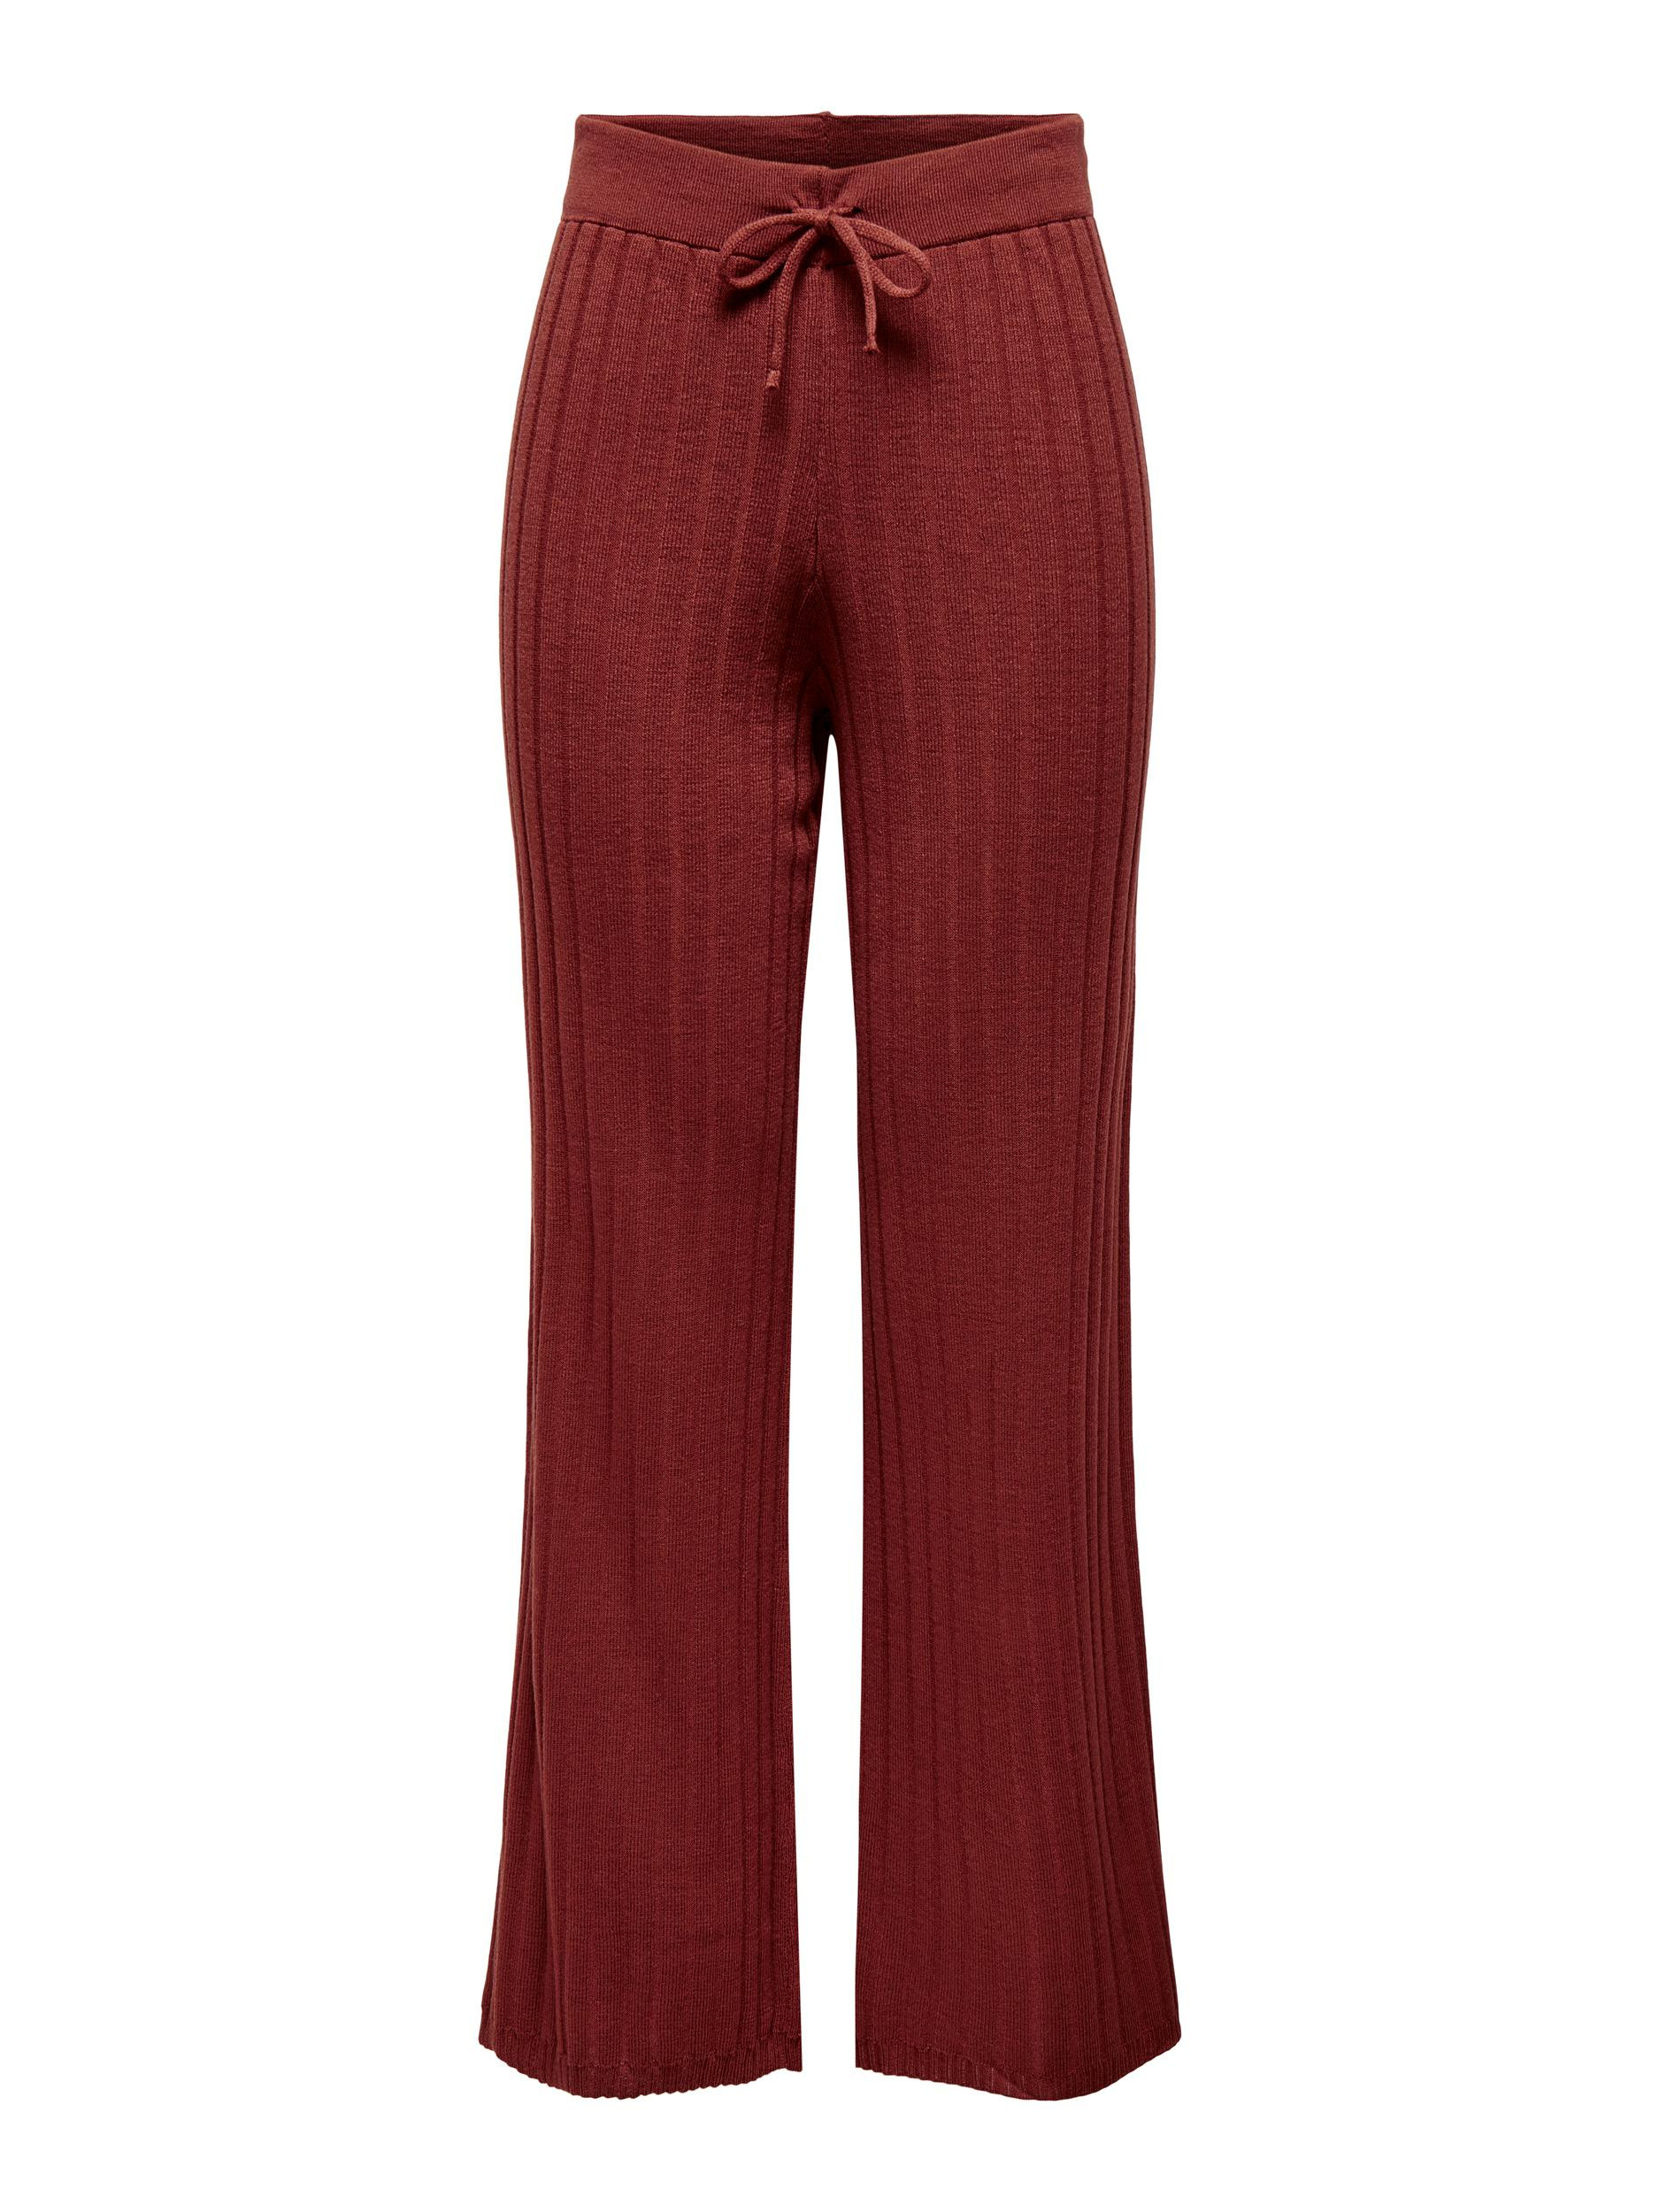 Pantaloni a vita alta, Rosso, large image number 0